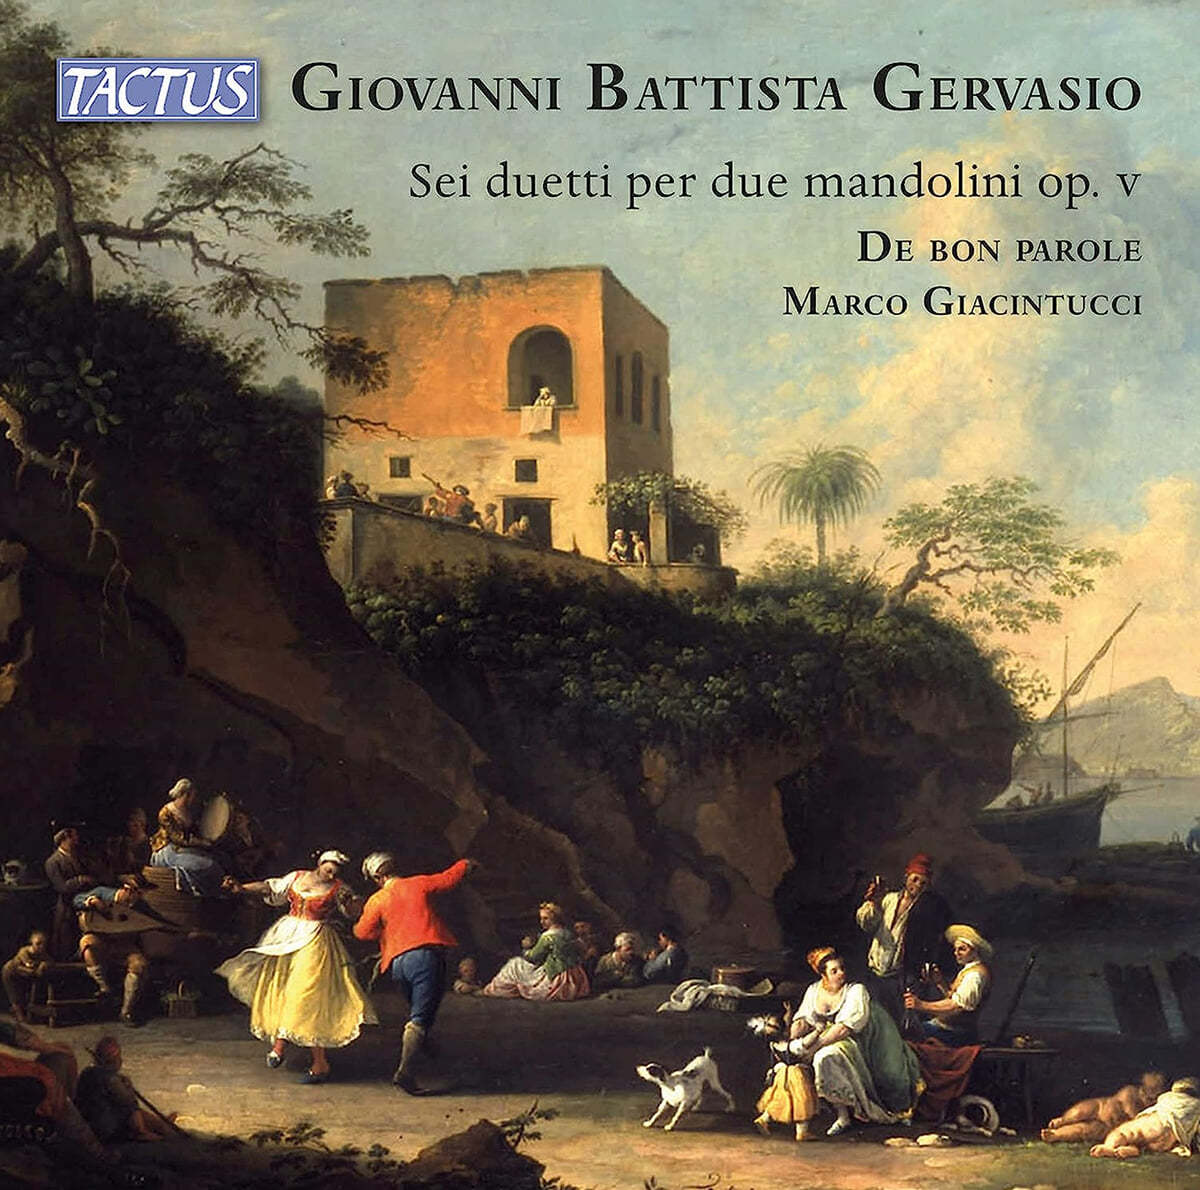 De Bon Parole 제르바시오: 두 대의 만돌린을 위한 여섯 곡의 듀엣 (Gervasio: Six duets for two mandolins op.5)